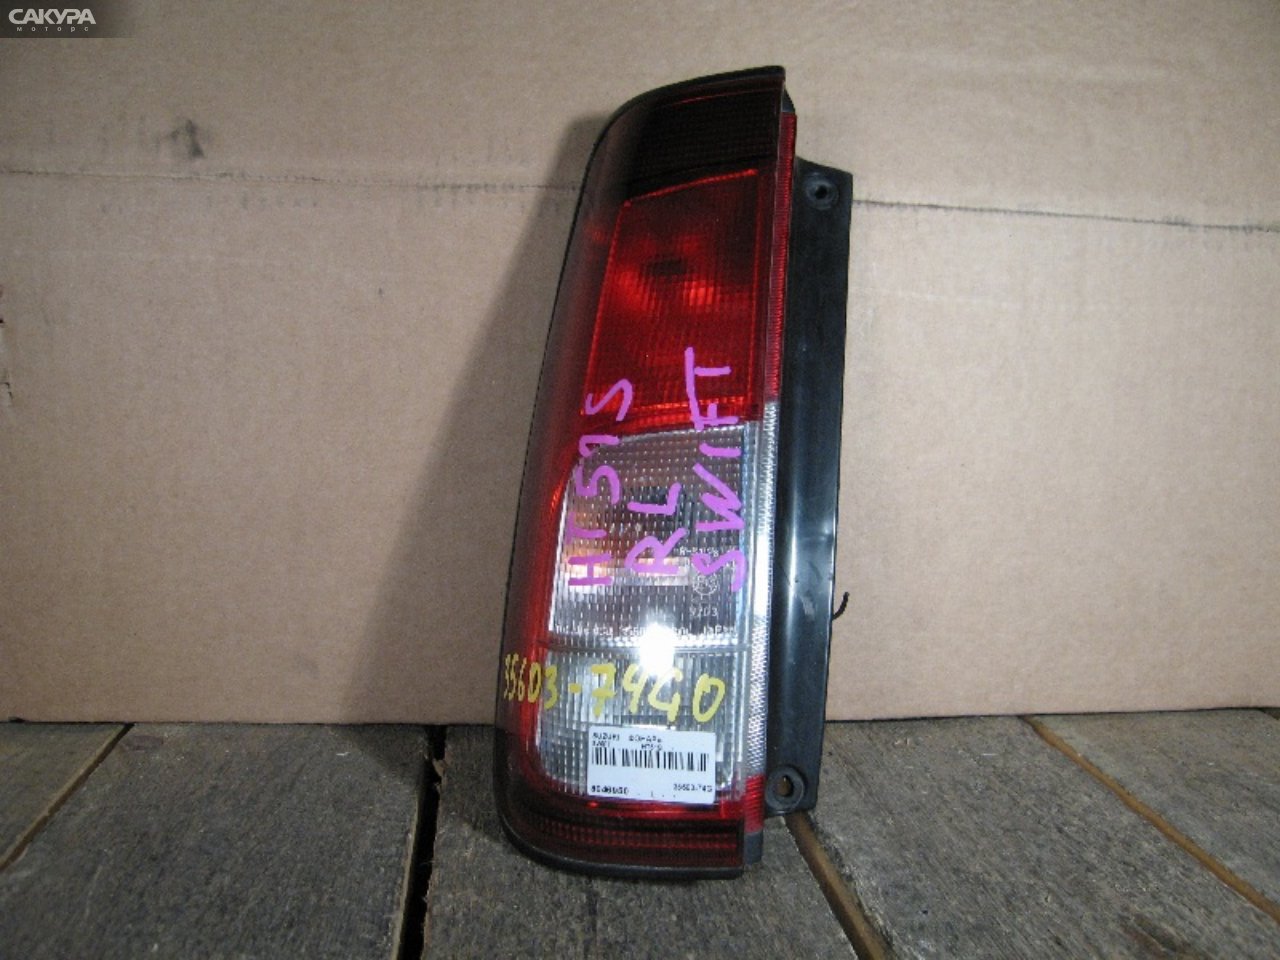 Фонарь стоп-сигнала левый Suzuki Swift HT51S 35603-74G0: купить в Сакура Абакан.